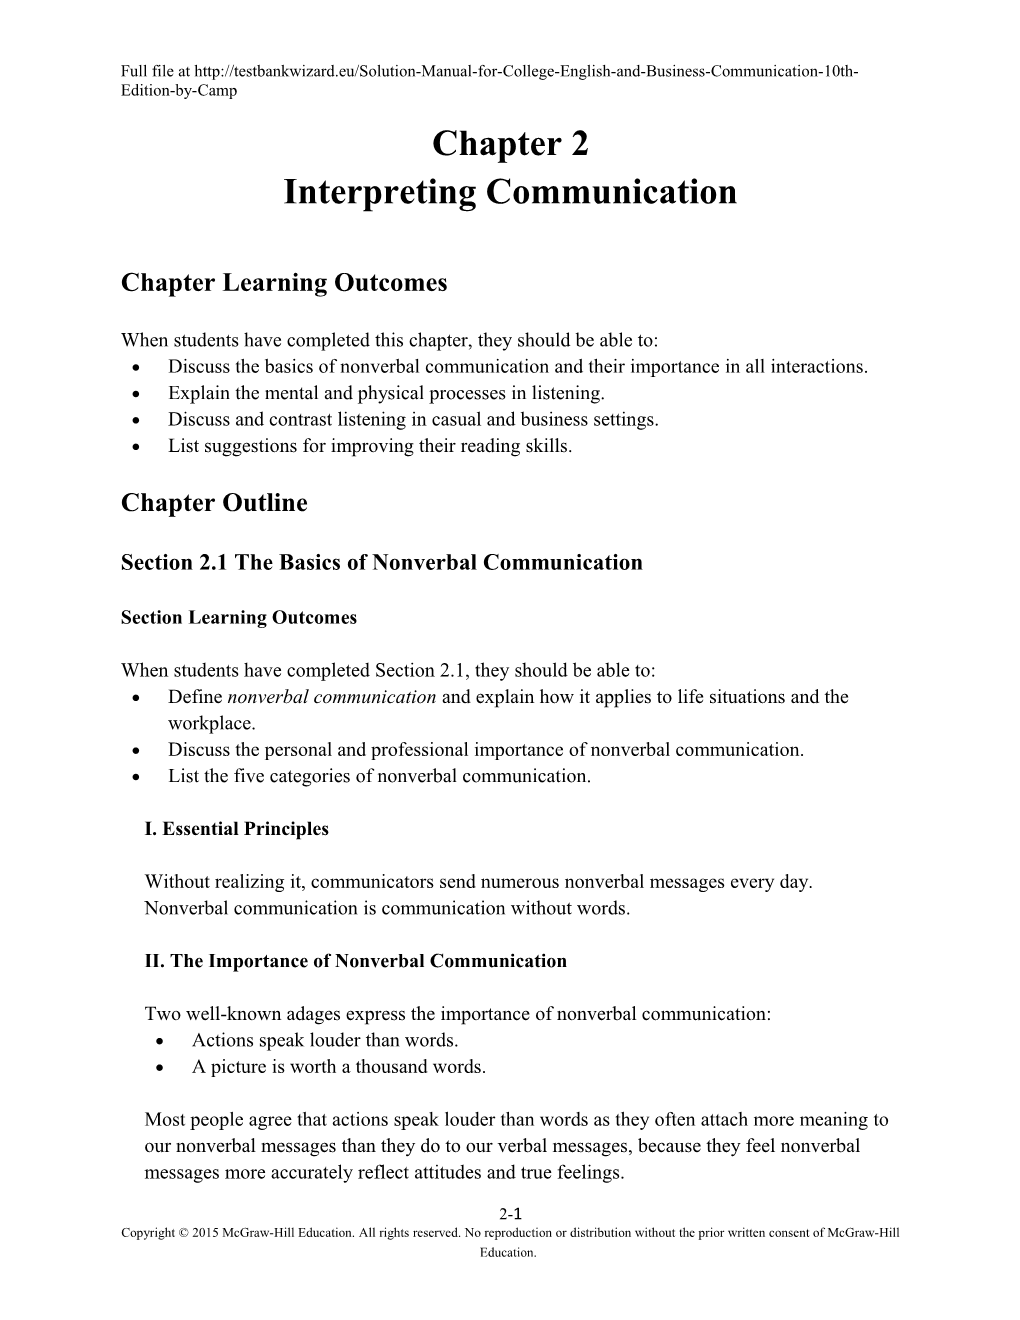 Interpreting Communication